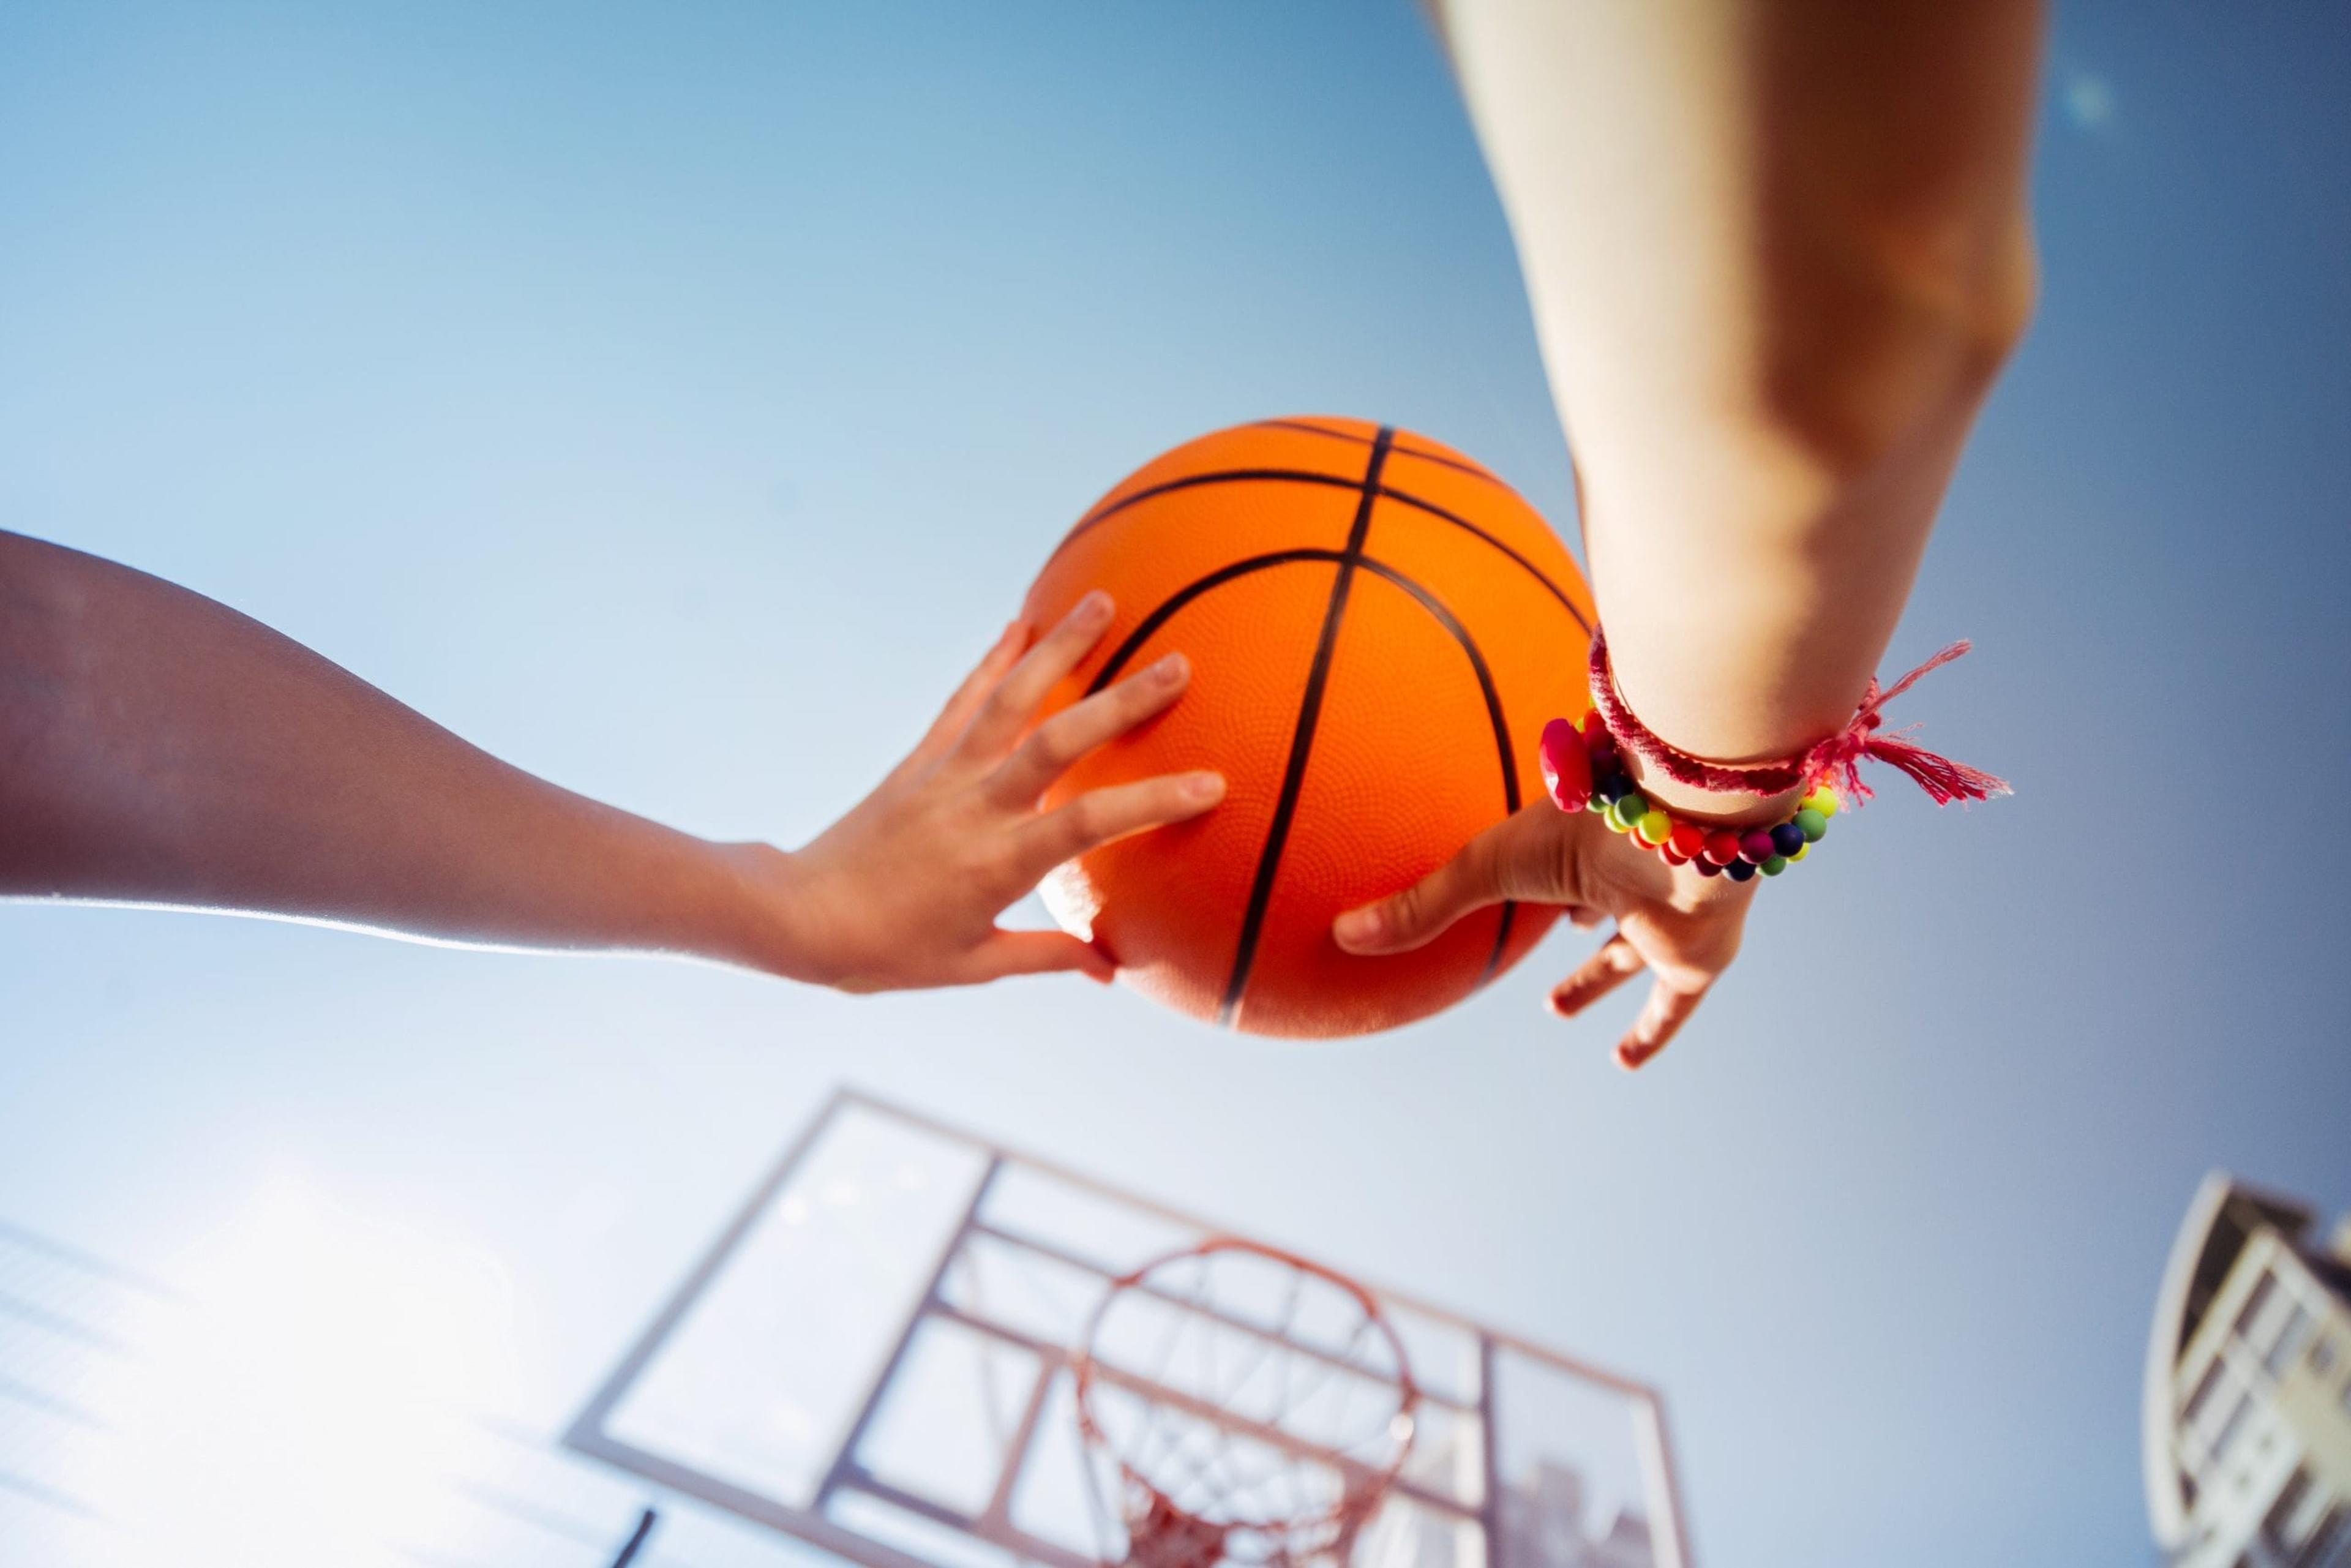 Middle school girl shooting a basketball